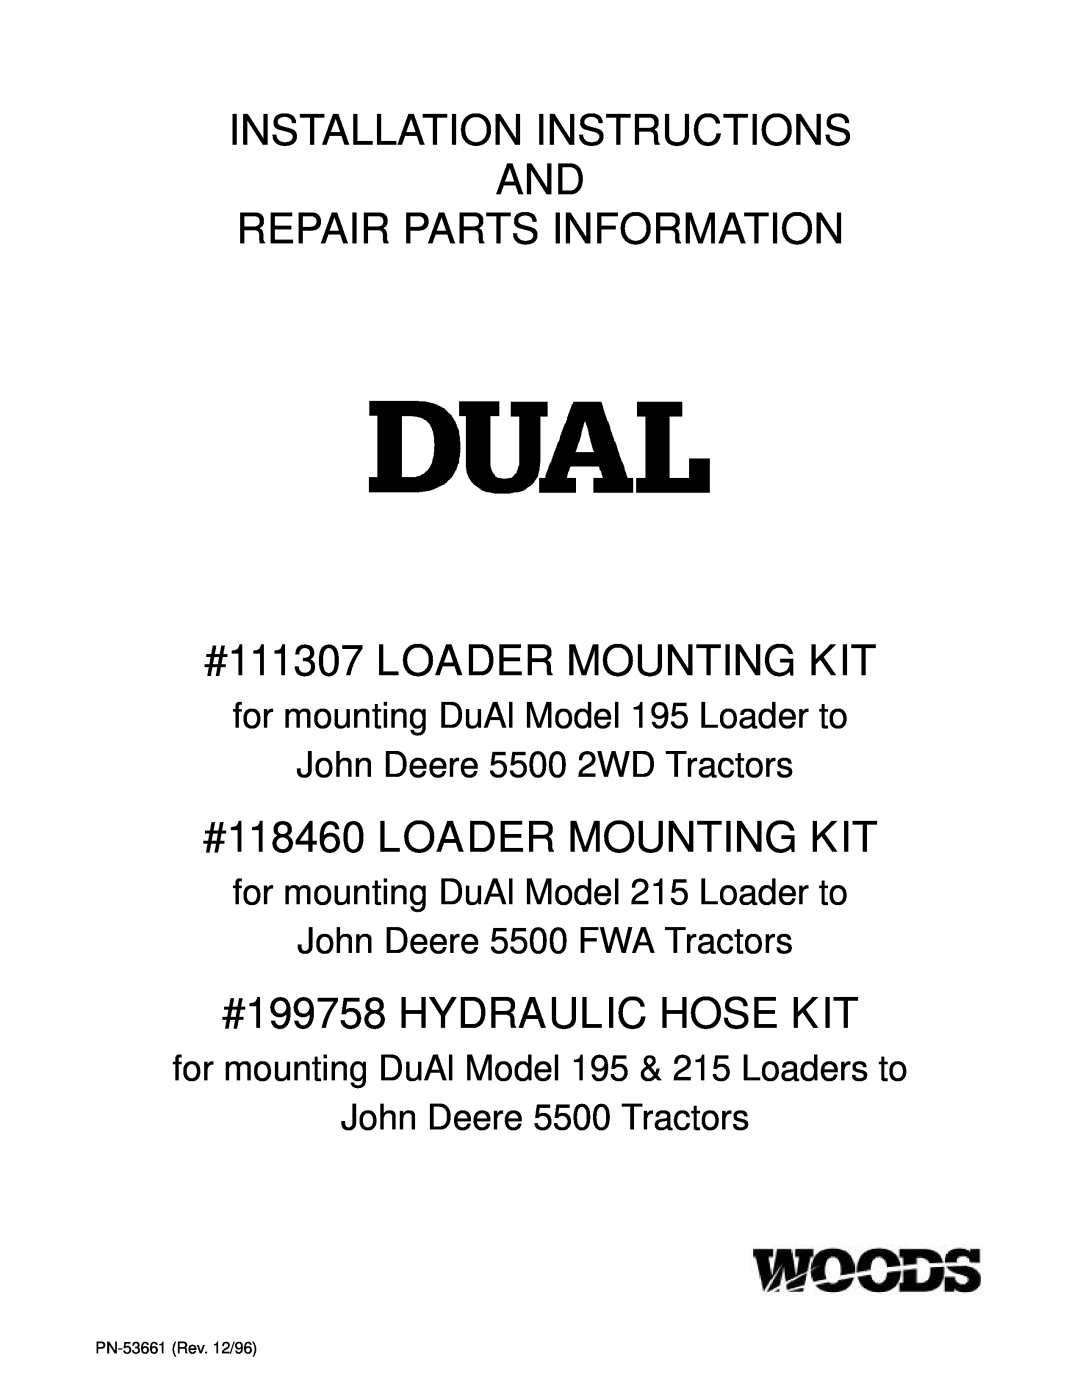 Woods Equipment 199758 installation instructions #111307 LOADER MOUNTING KIT, #118460 LOADER MOUNTING KIT 